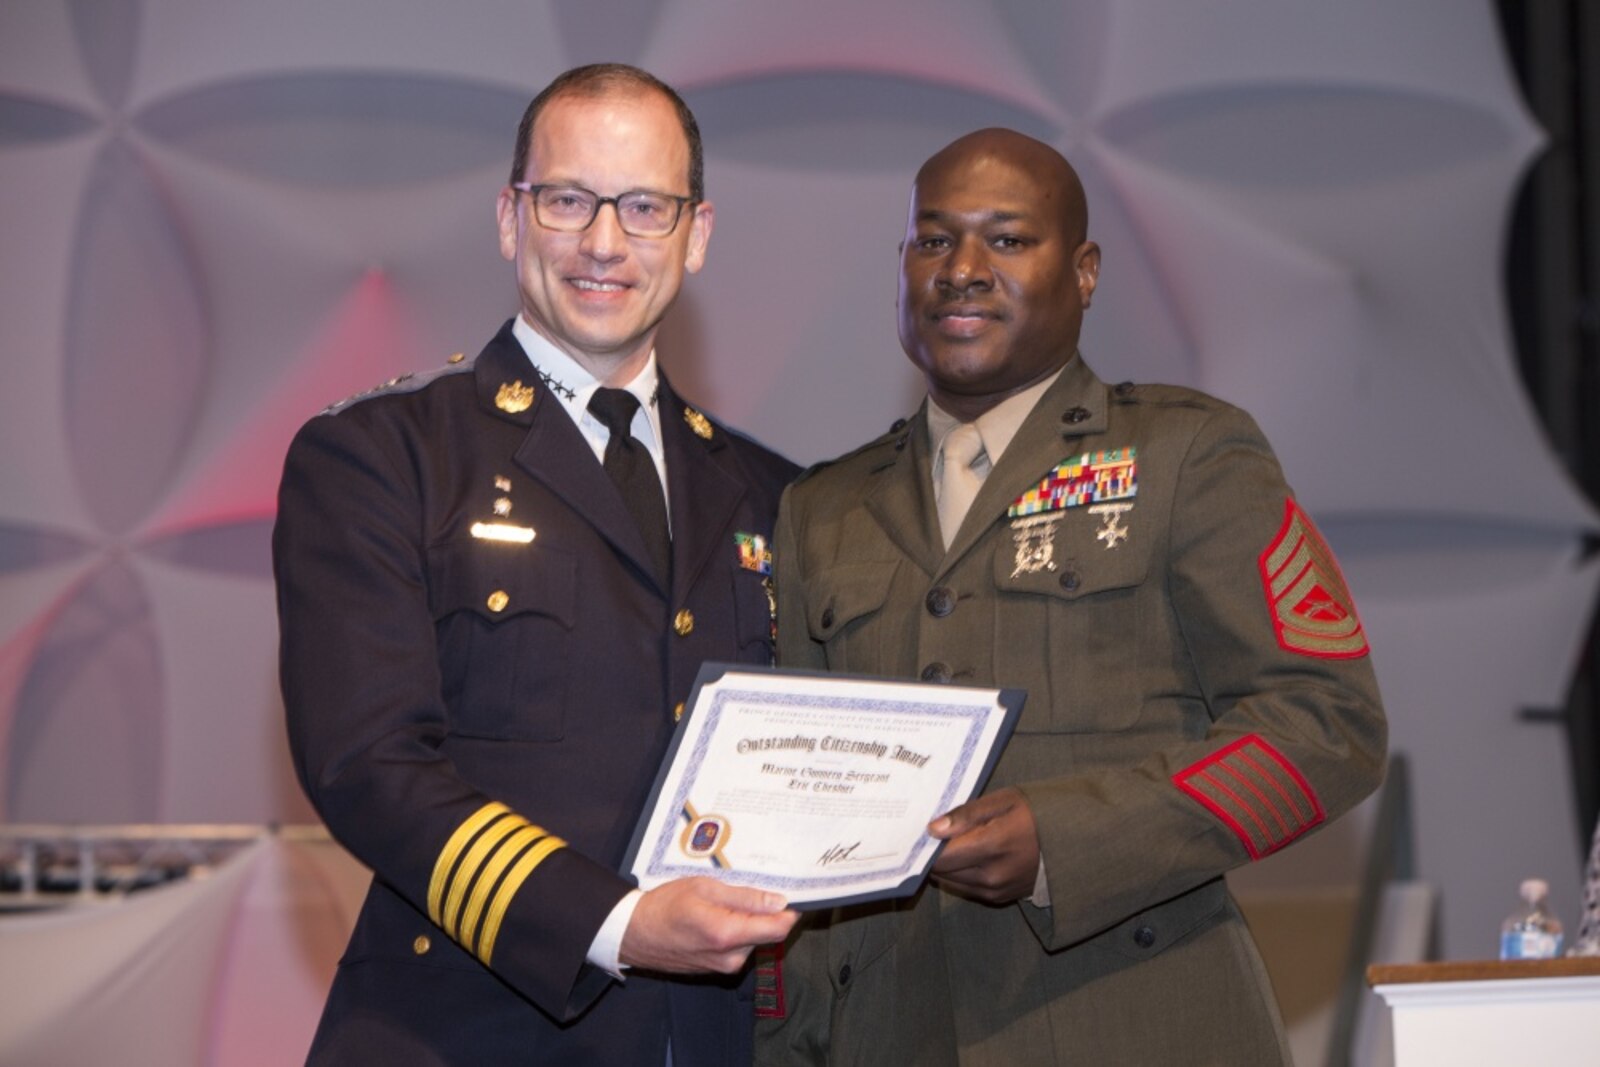 Gunnery Sgt. Cheshier's Award